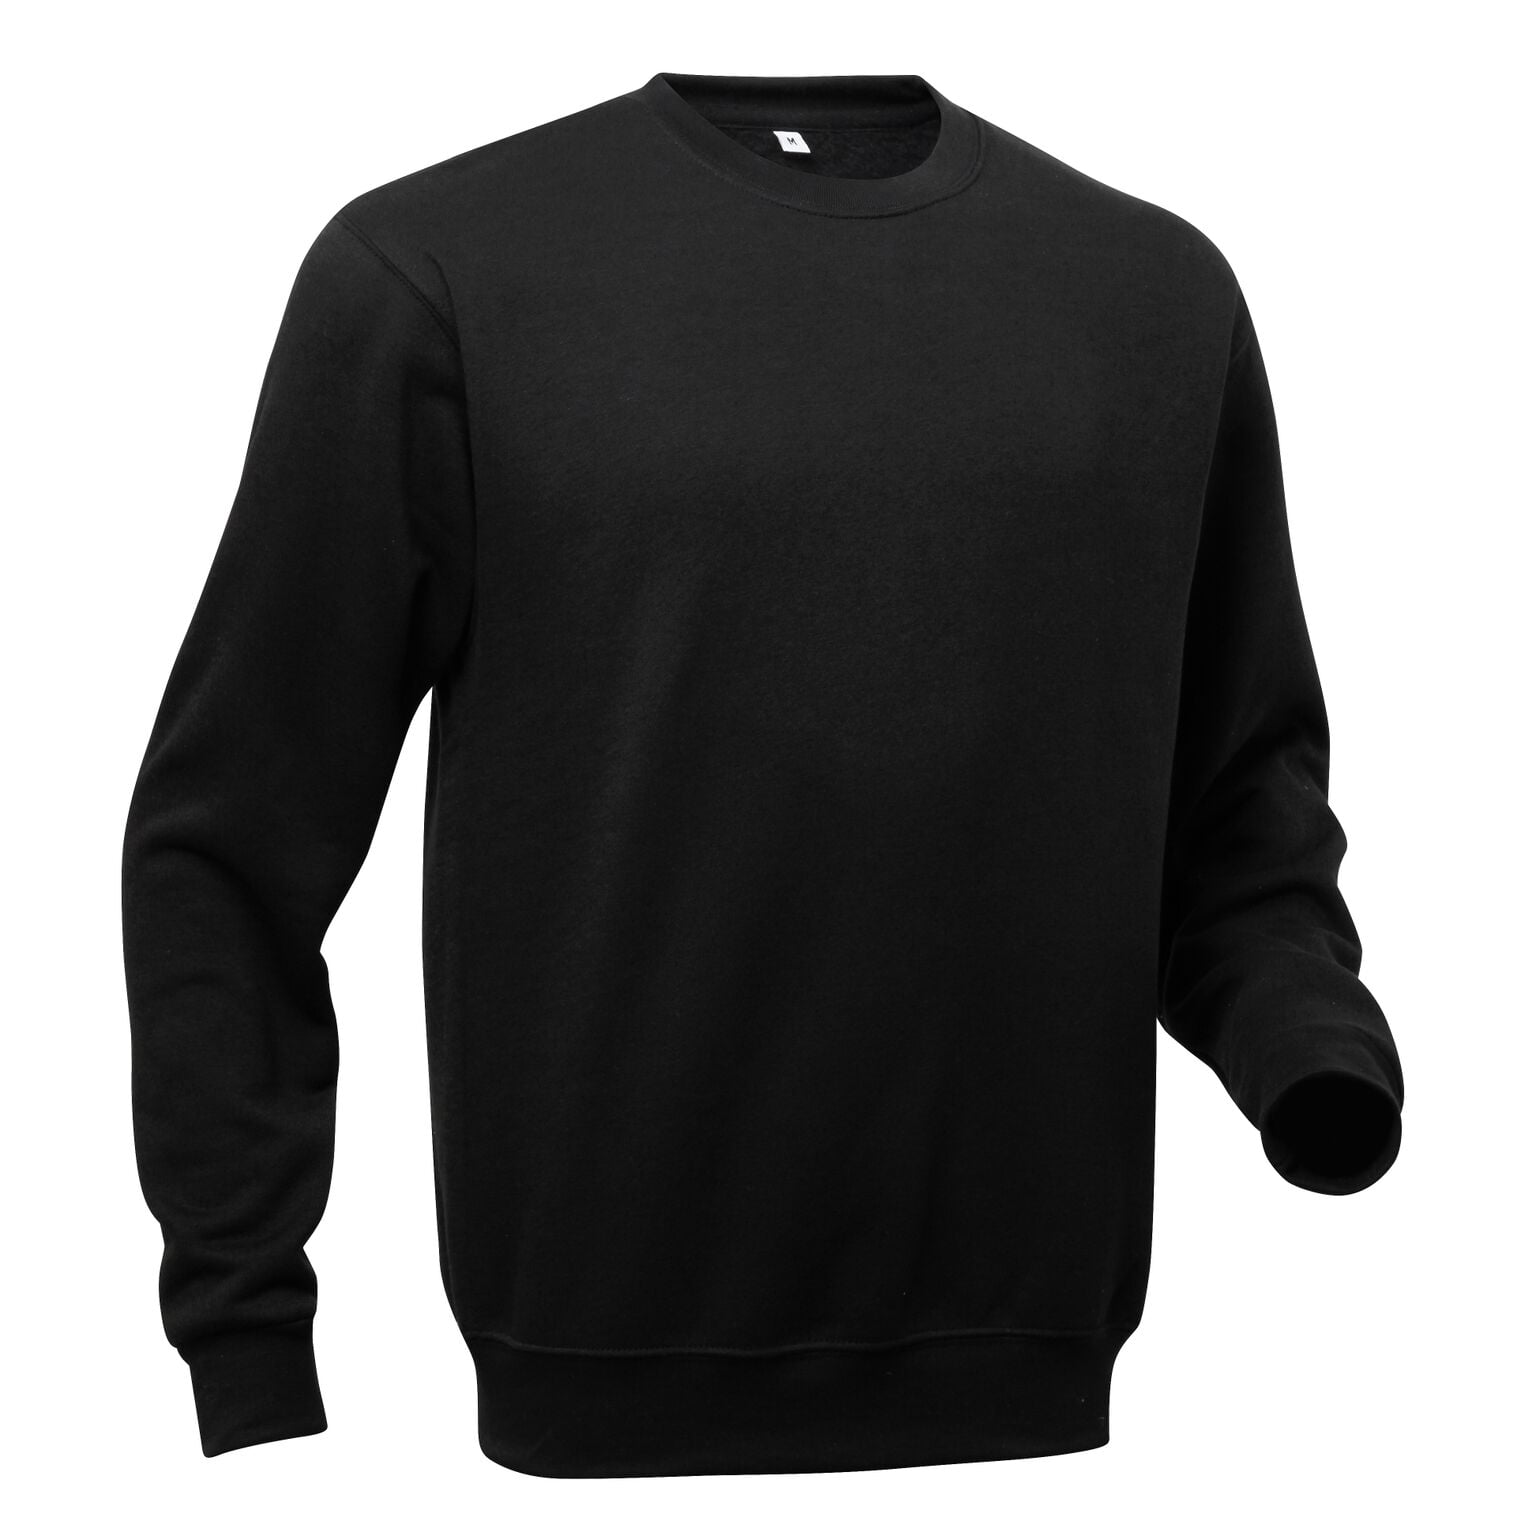 Pro RTX Mens Pro Sweatshirt - Walmart.com